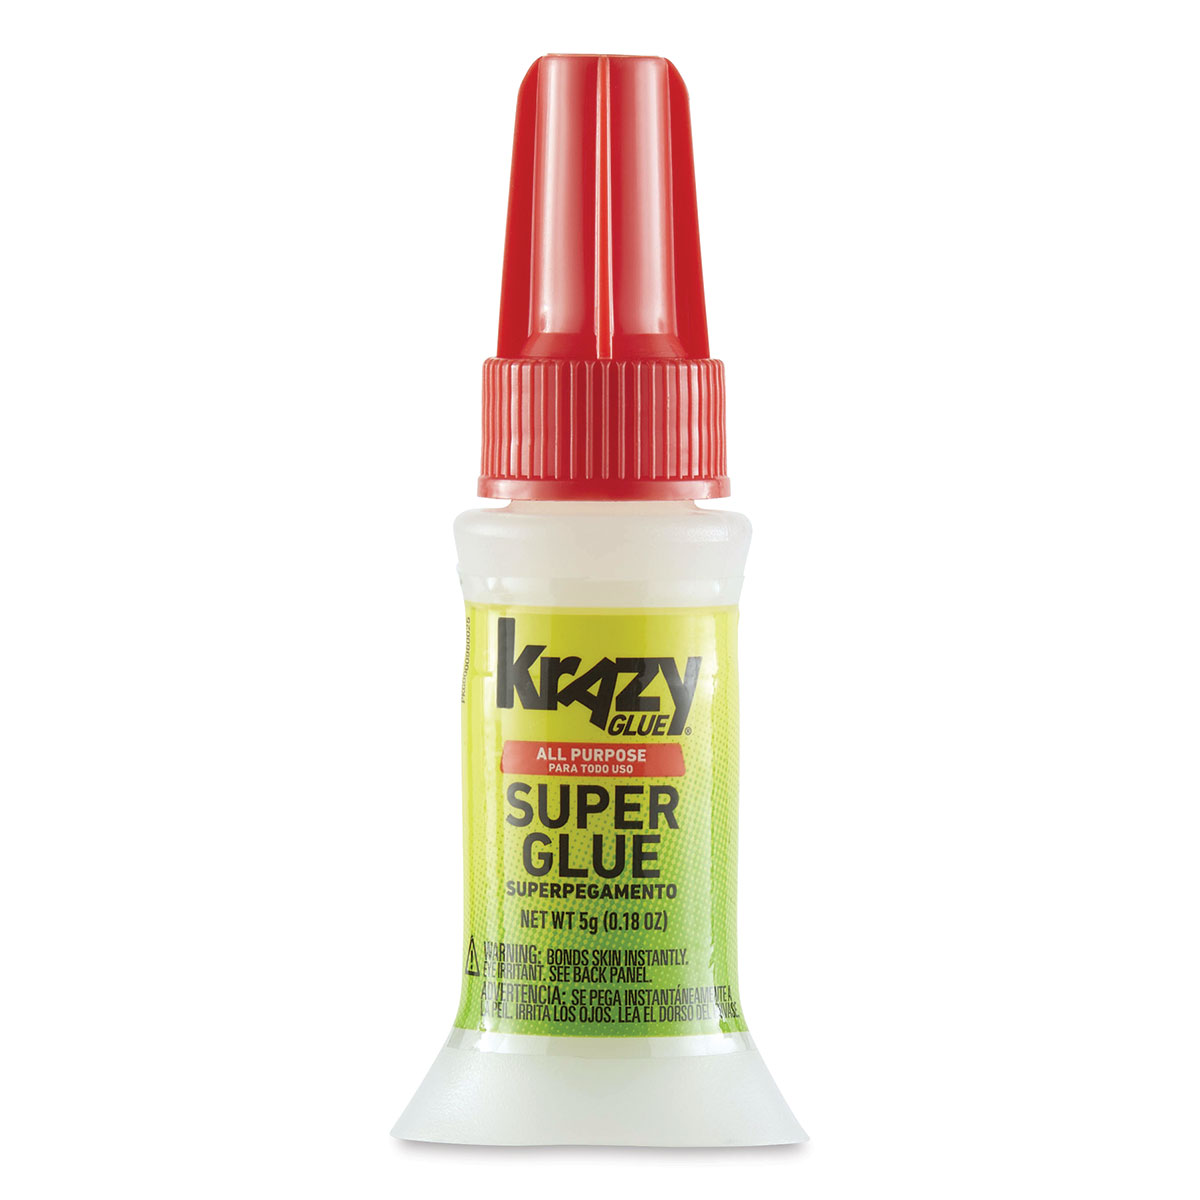 Krazy Glue All Purpose Super Glue - Single-Use Tubes, 0.5 g